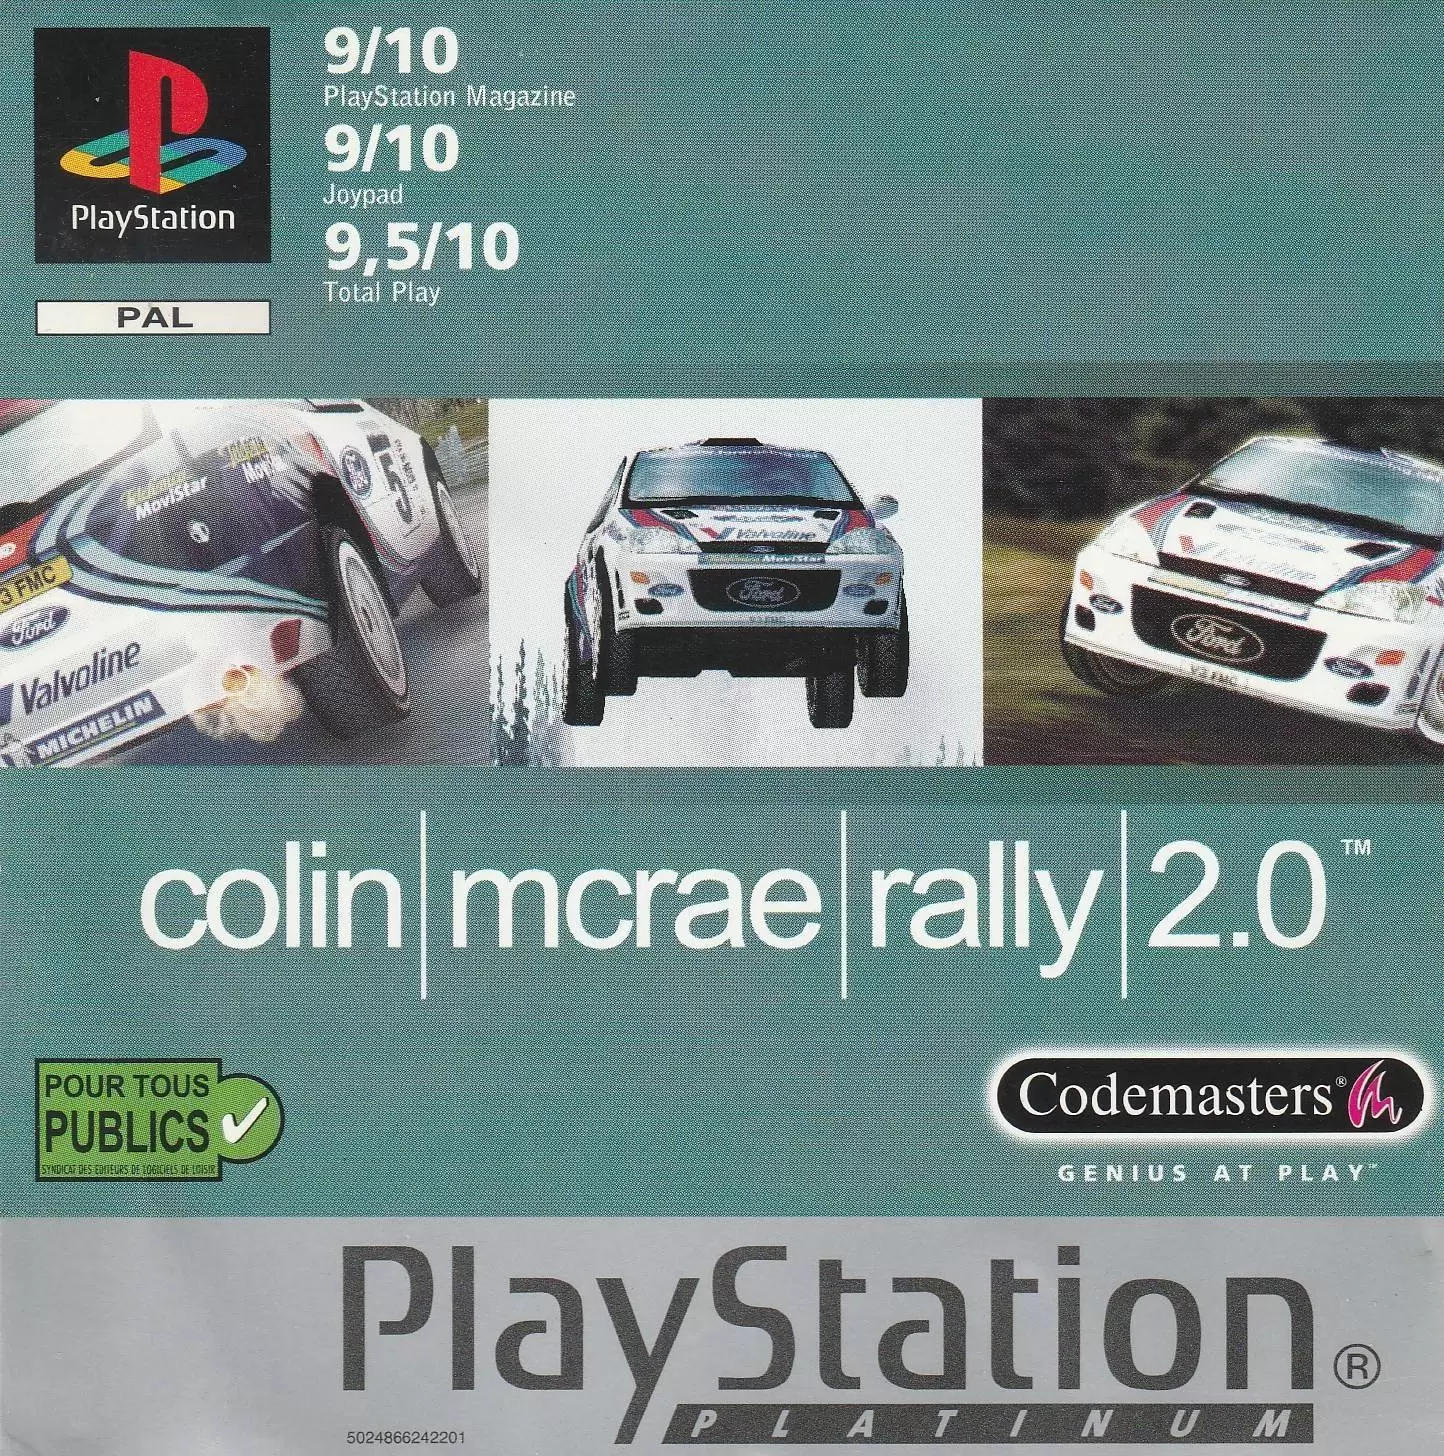 Playstation games - Colin McRae Rally 2.0